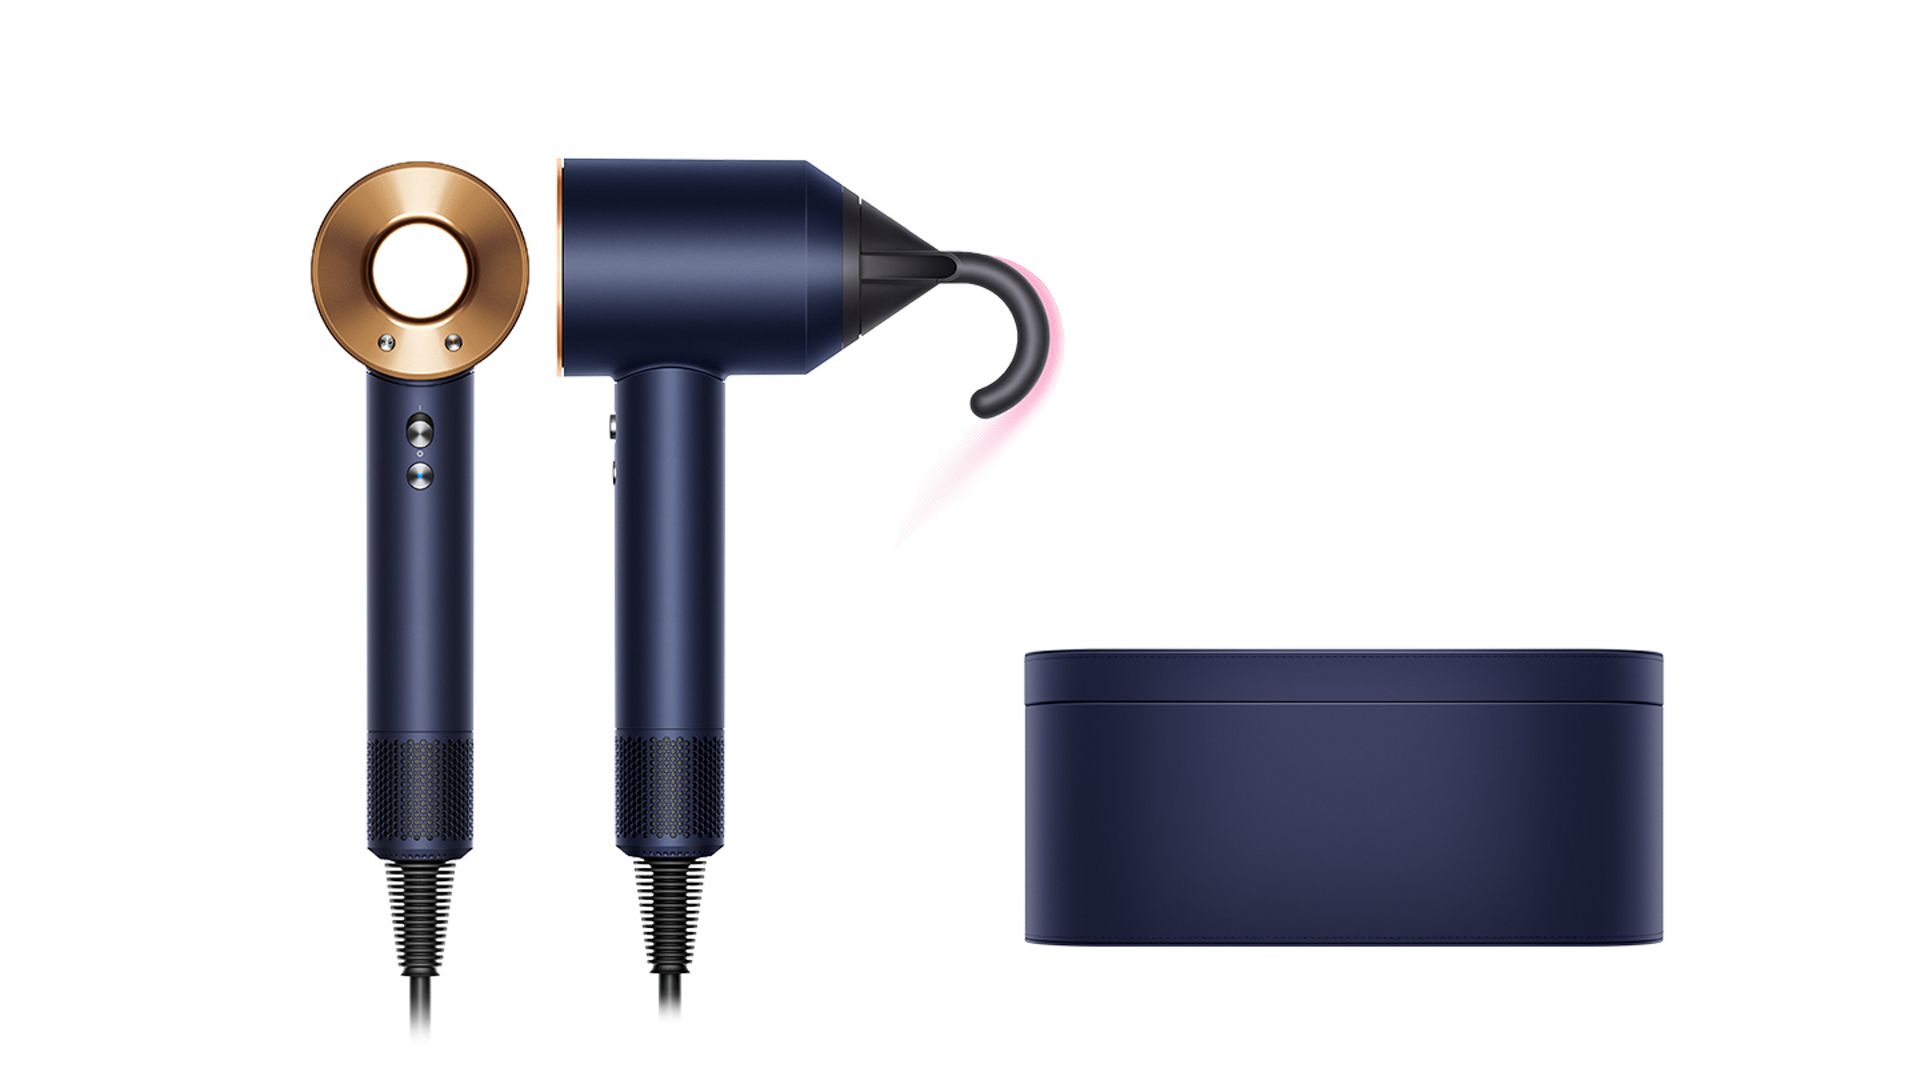 Dyson Supersonic™ hair dryer (Prussian blue/rich copper)